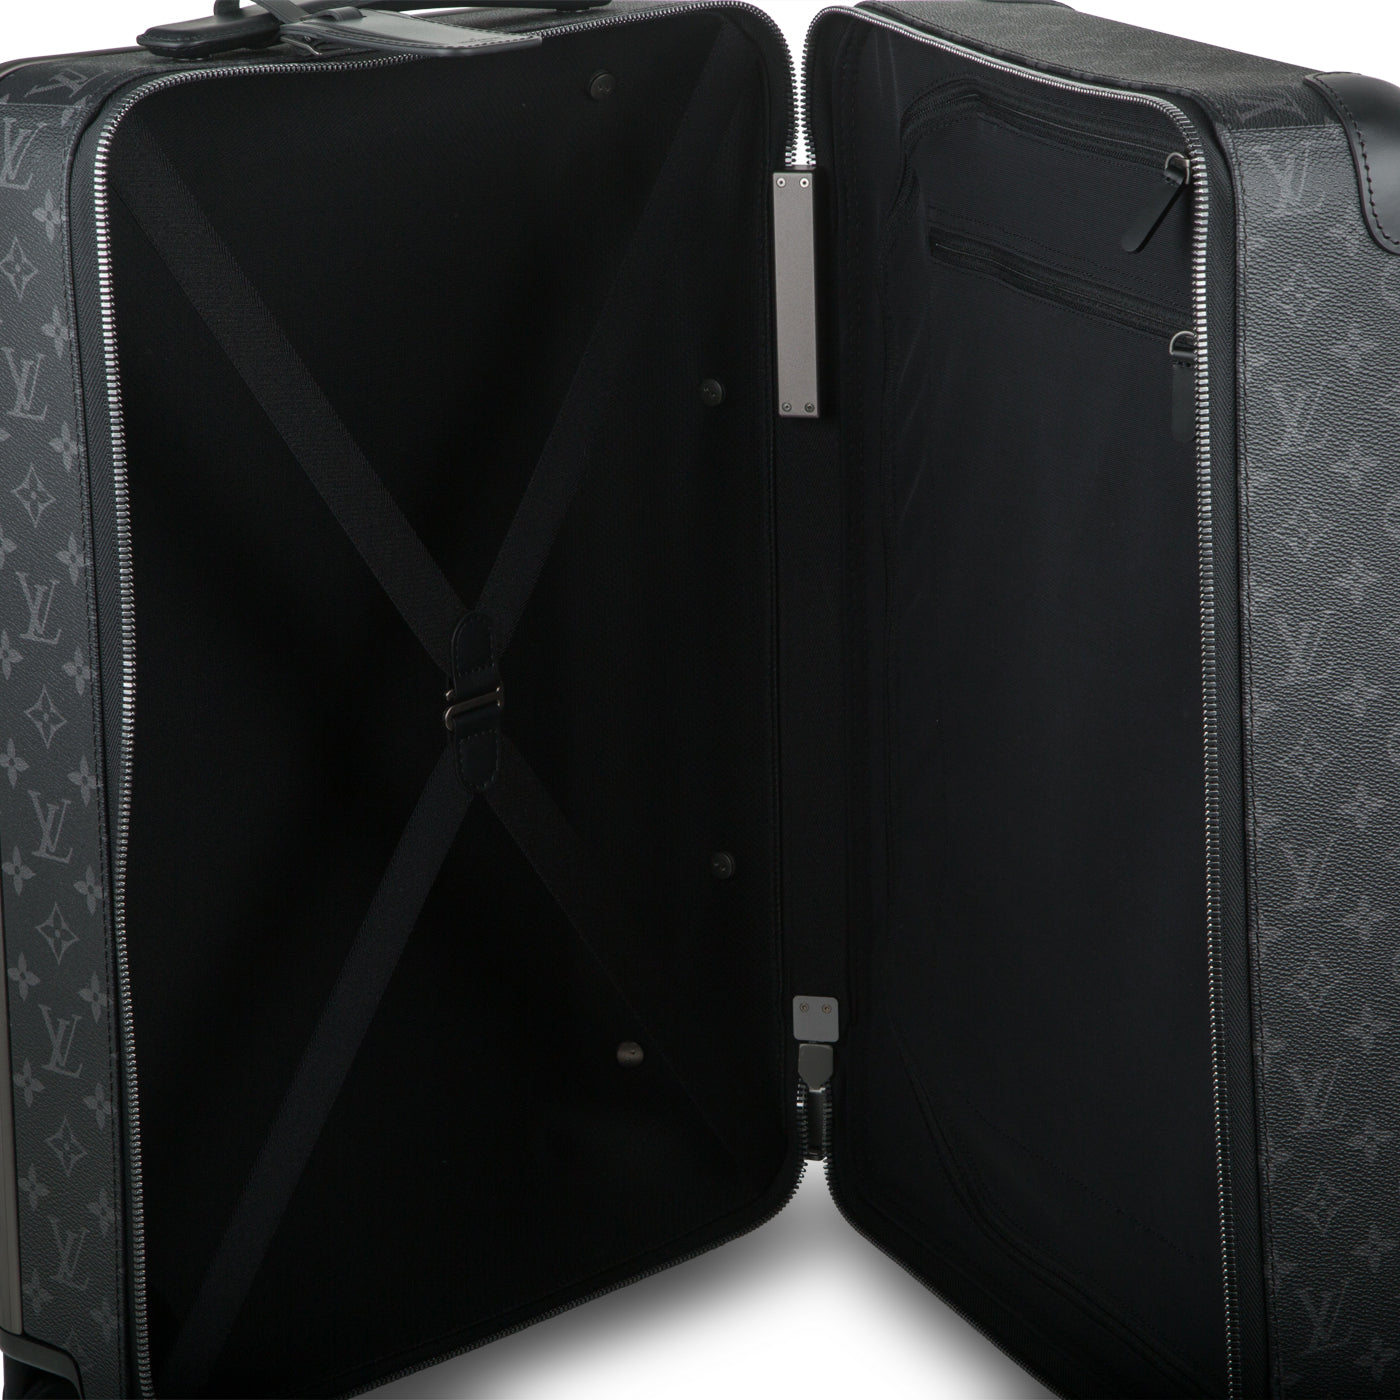 Louis Vuitton Horizon 55 Roller Luggage Carry On Black Monogram at